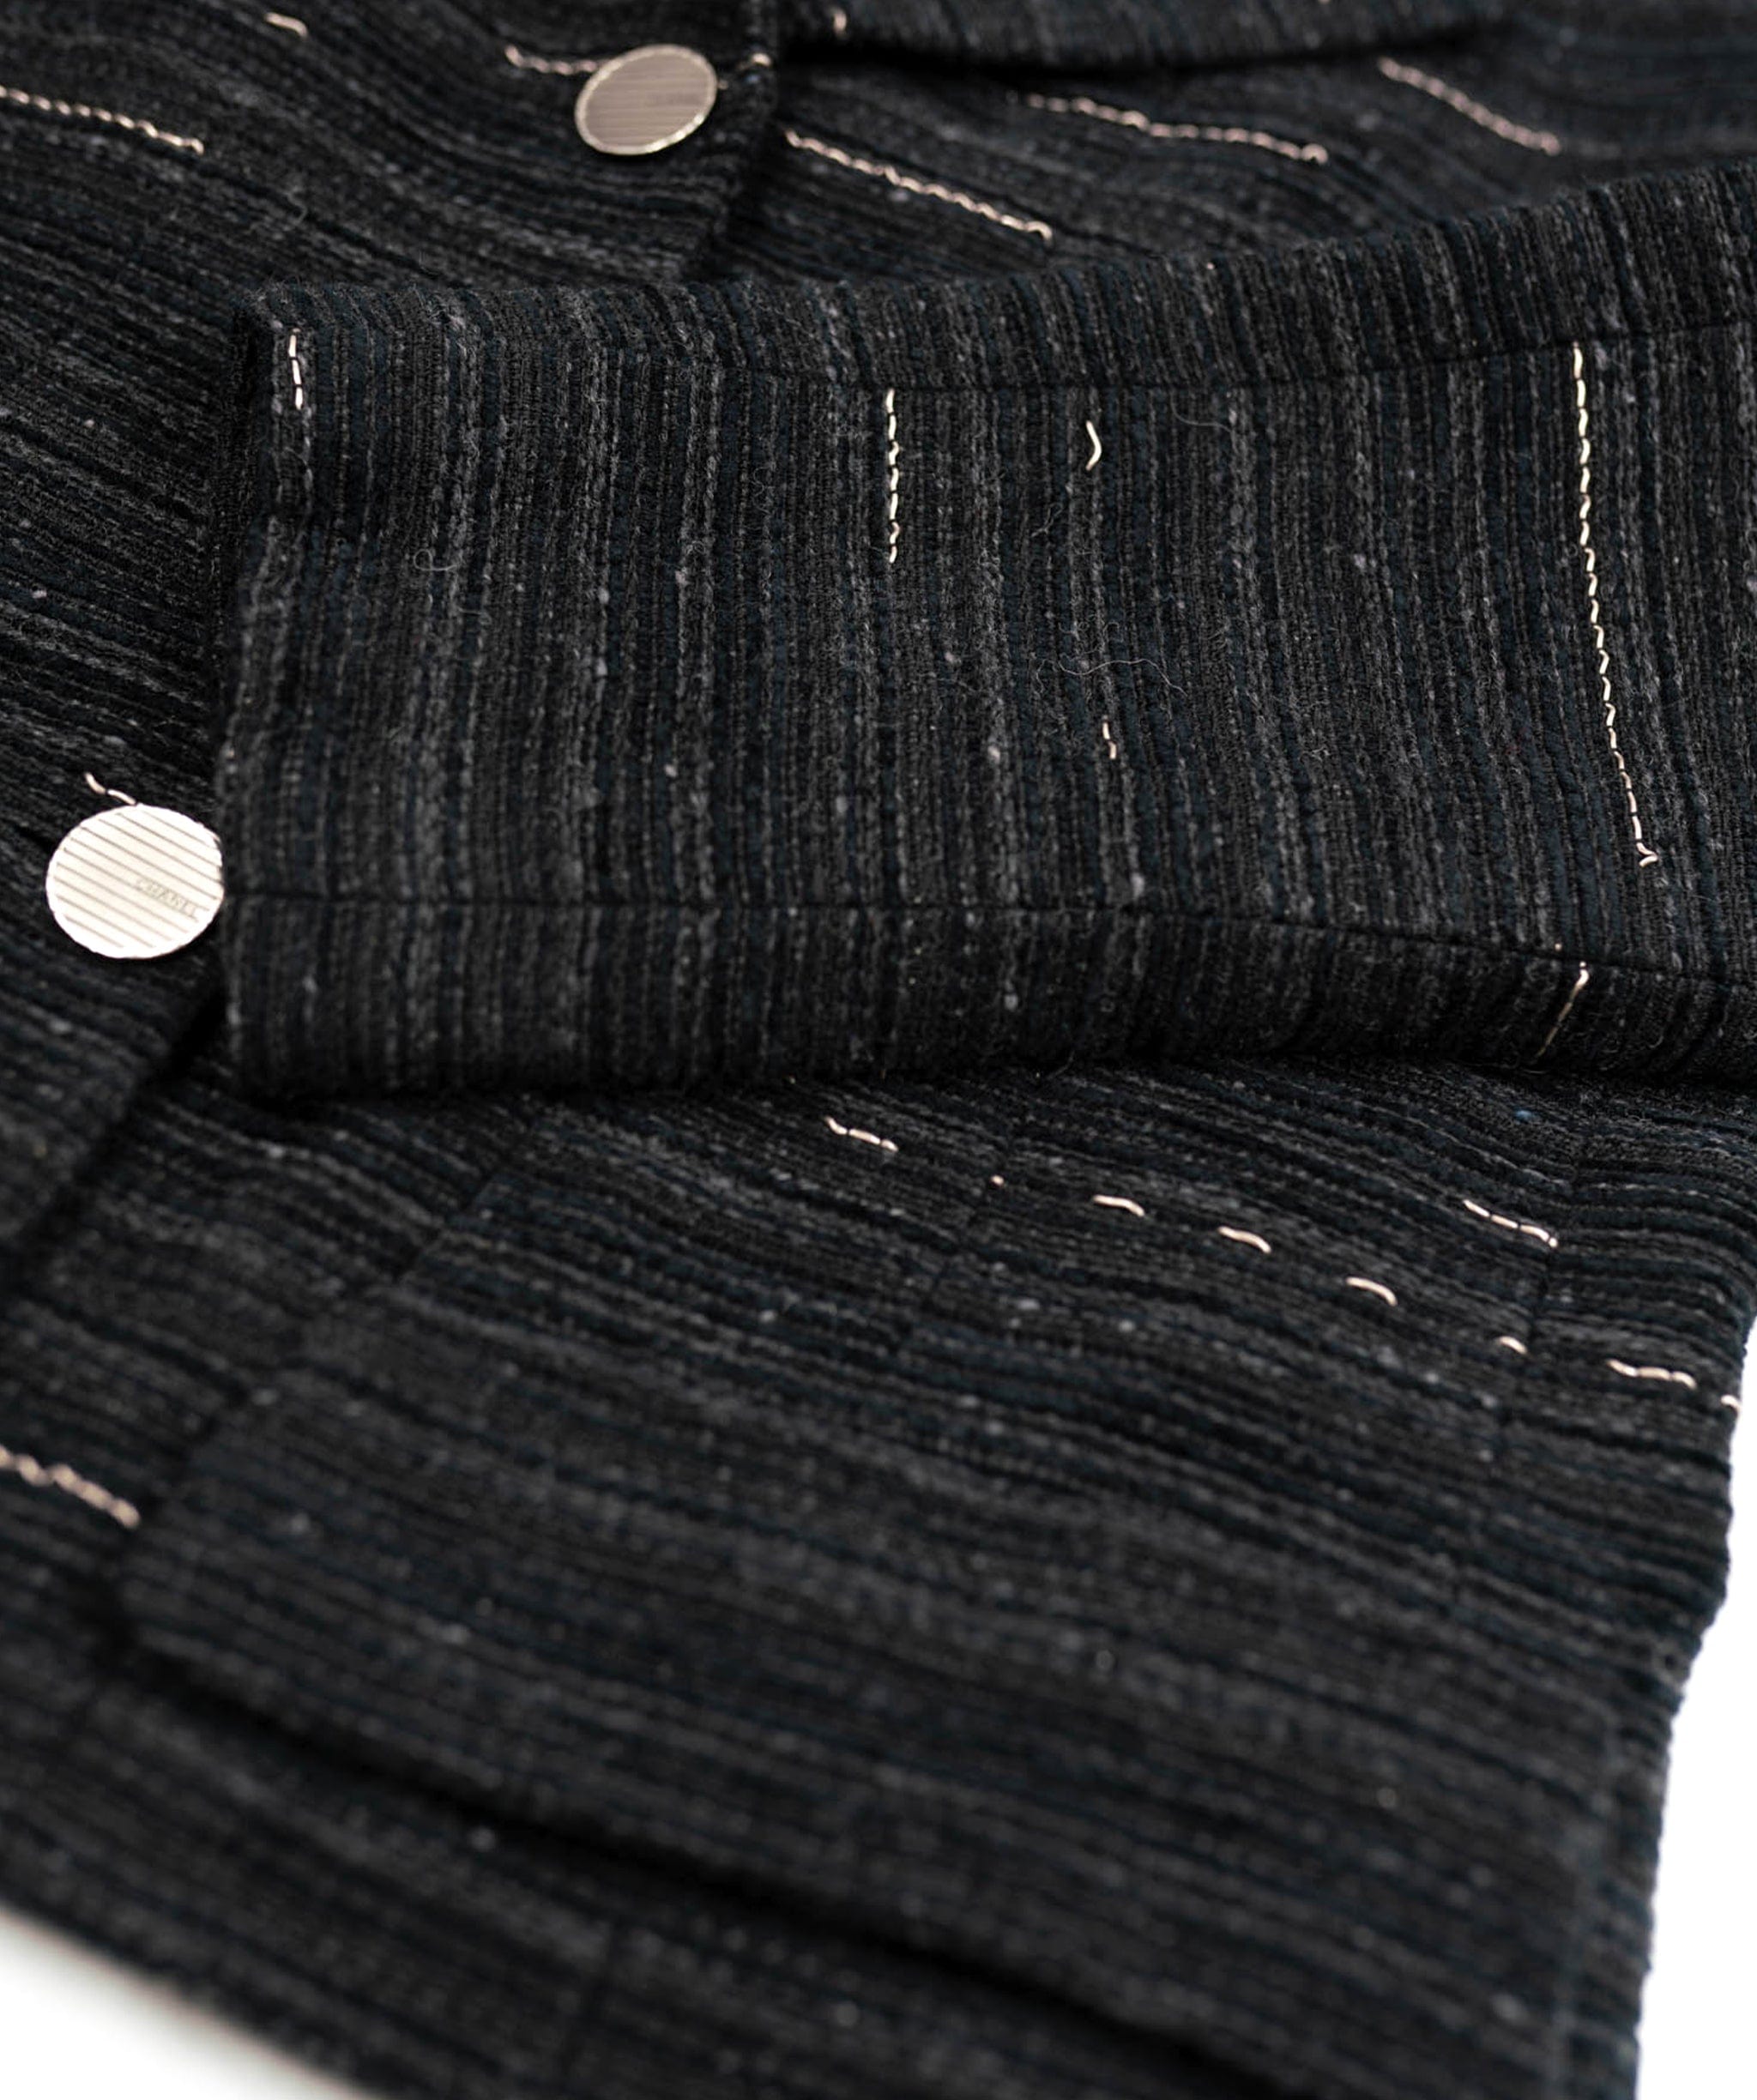 Chanel Chanel Dark Grey Tweed Jacket - AWL3840